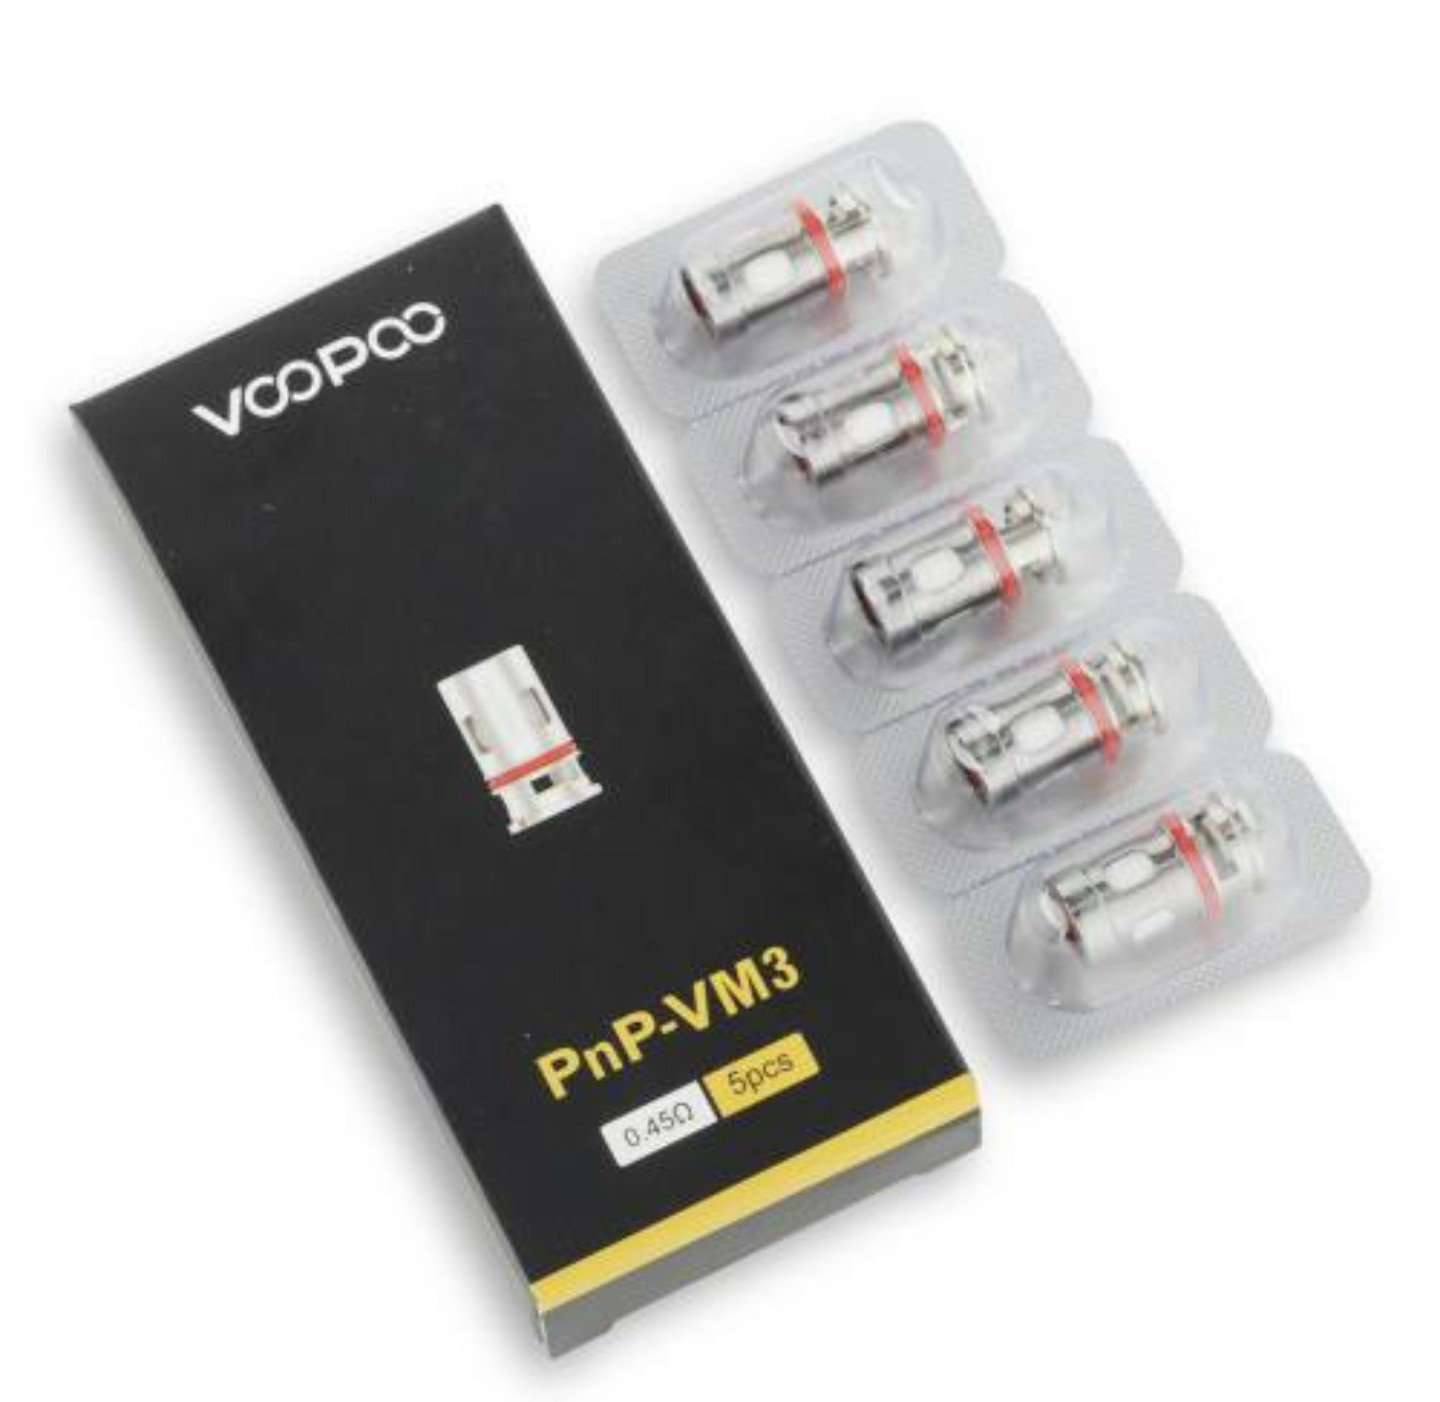 voopoo pnp vm3 045ohm coils Vape Dubai | Buy Vape Online in UAE - SmokeFree